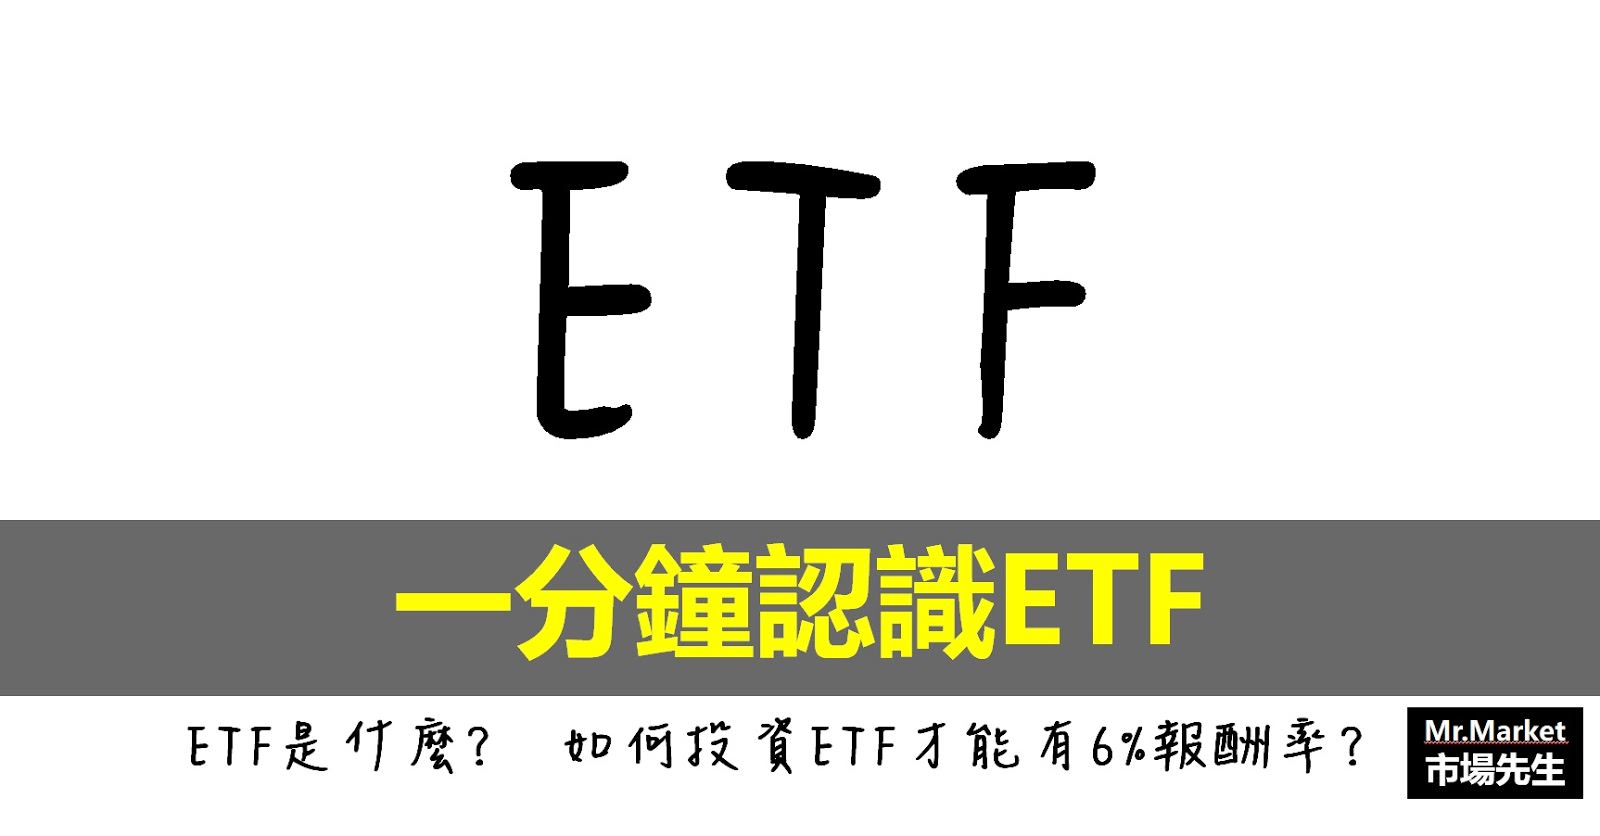 ETF是什麼? 市場先生推薦 ETF 怎麼買報酬率超過6 Mr.Market市場先生